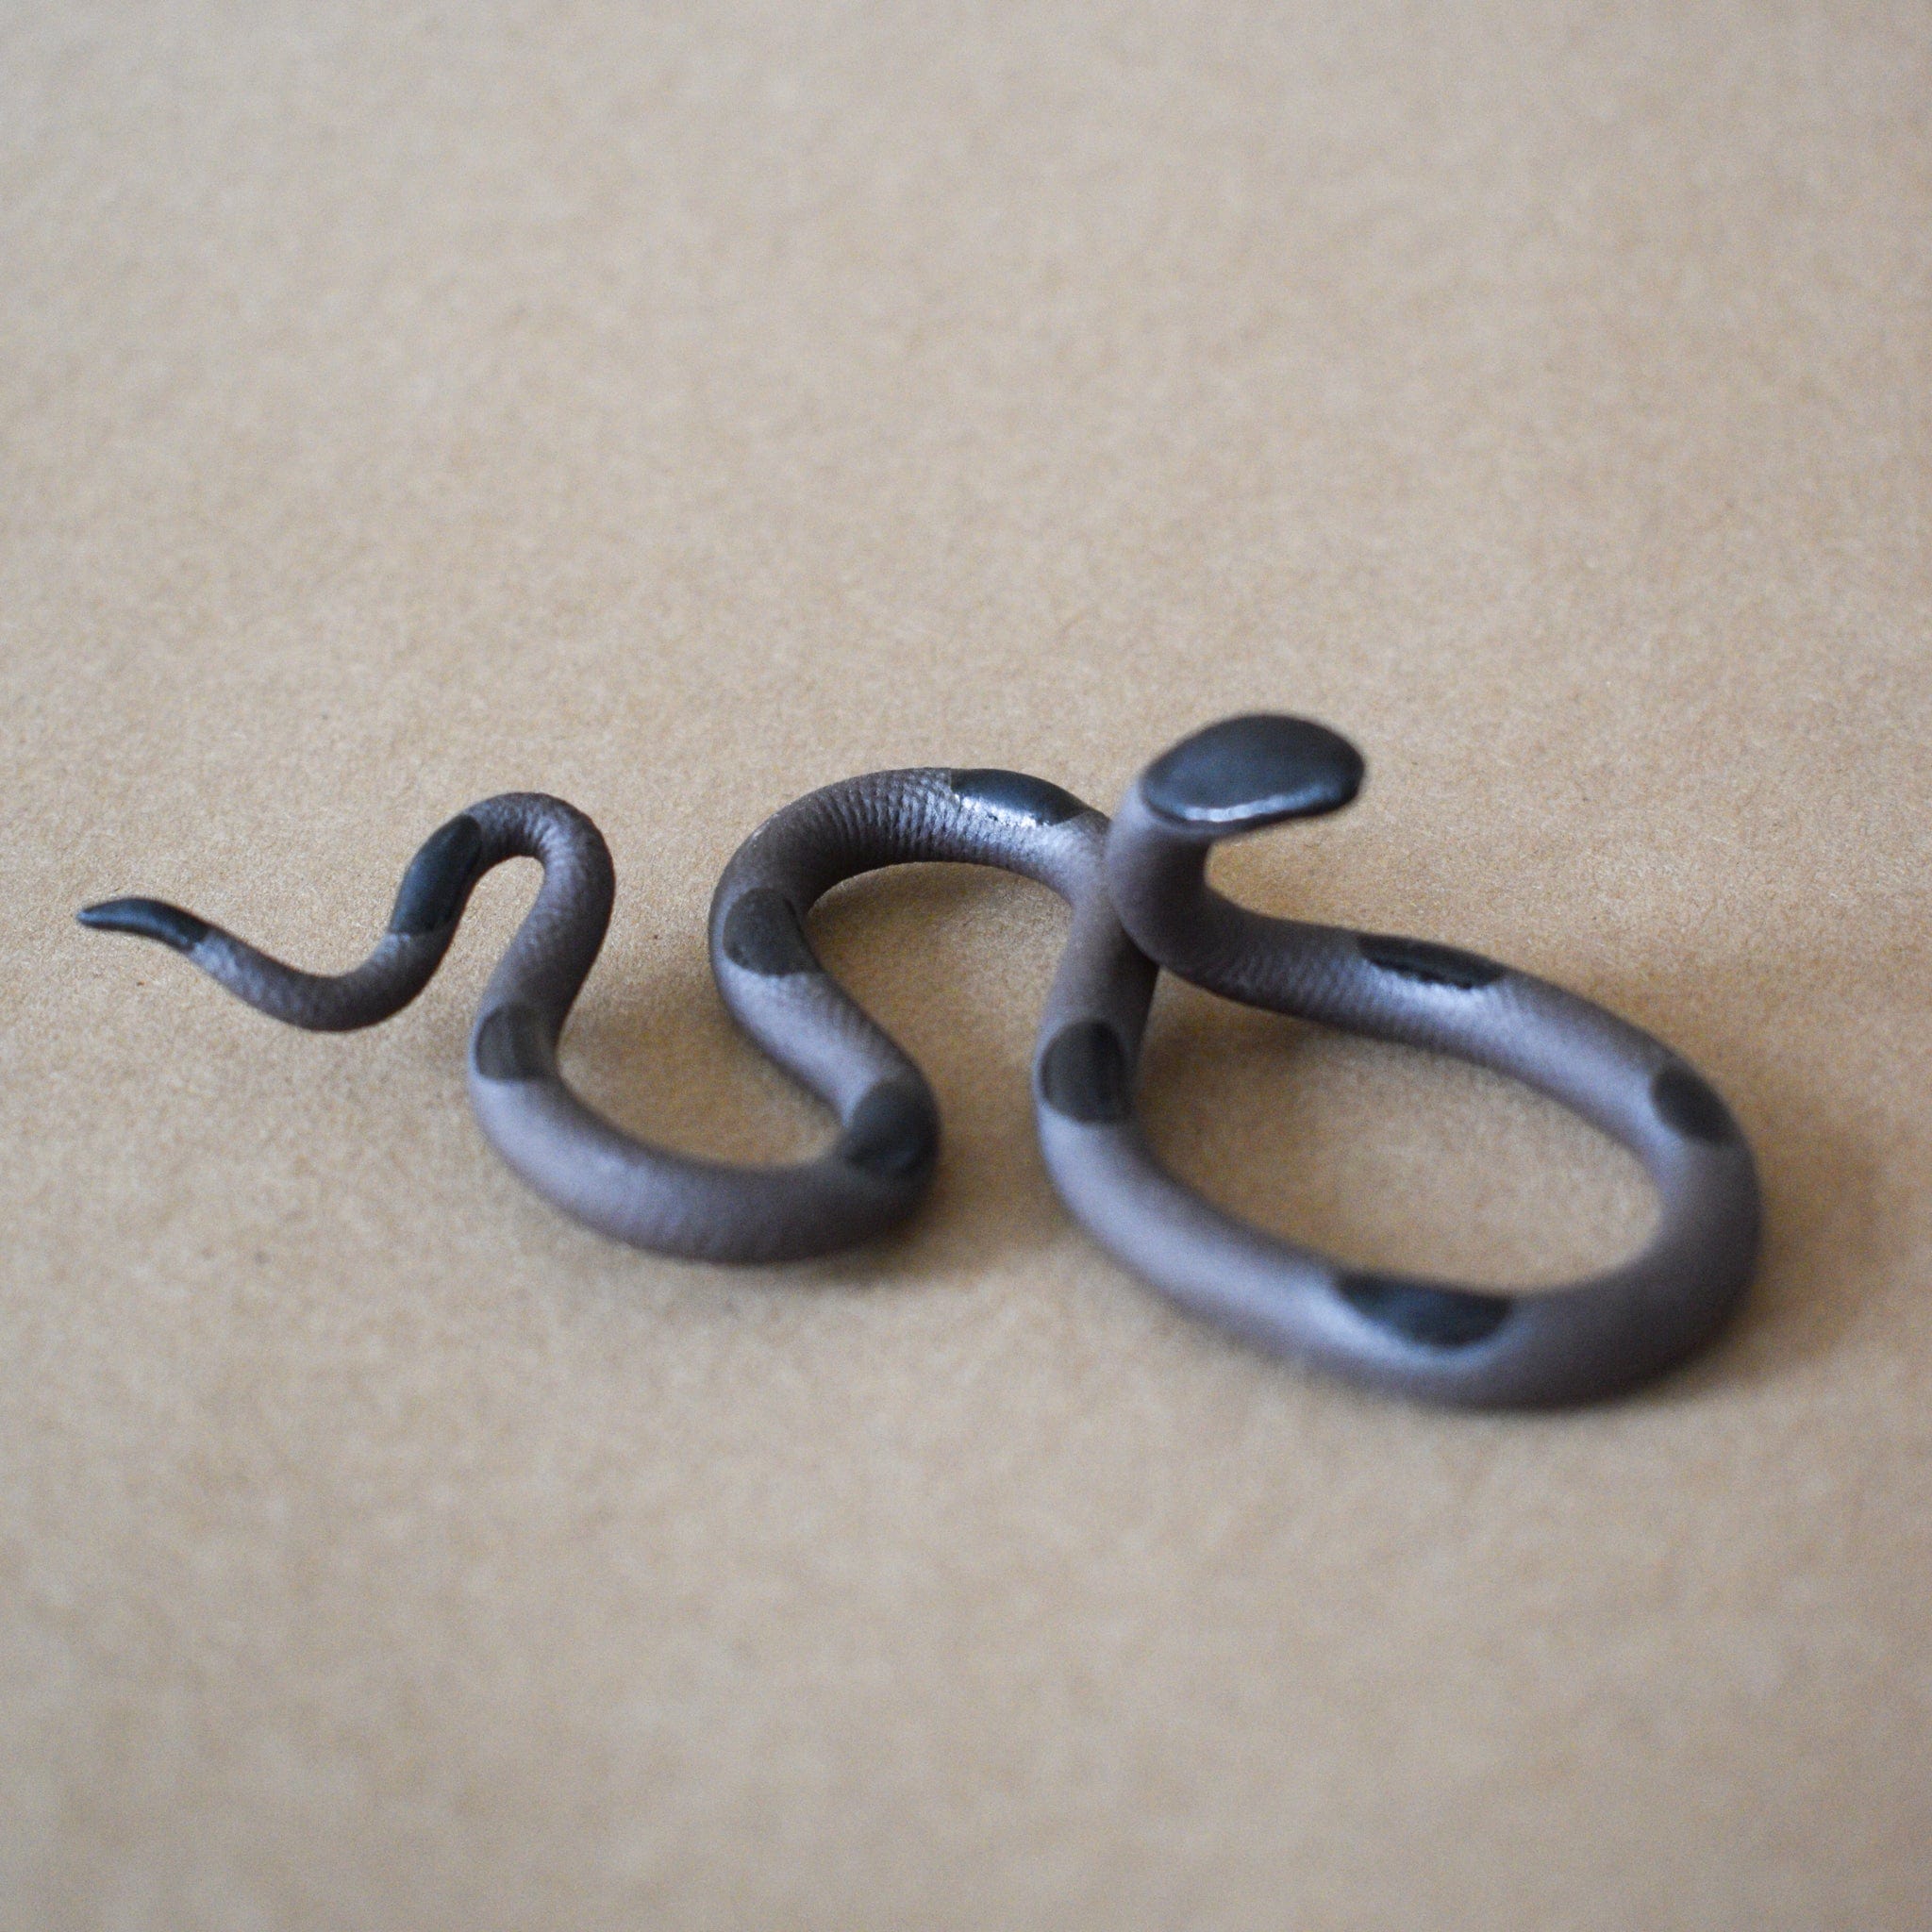 Carter and Rose Decor Saul - Black w/ Black Ceramic Tabletop Snake